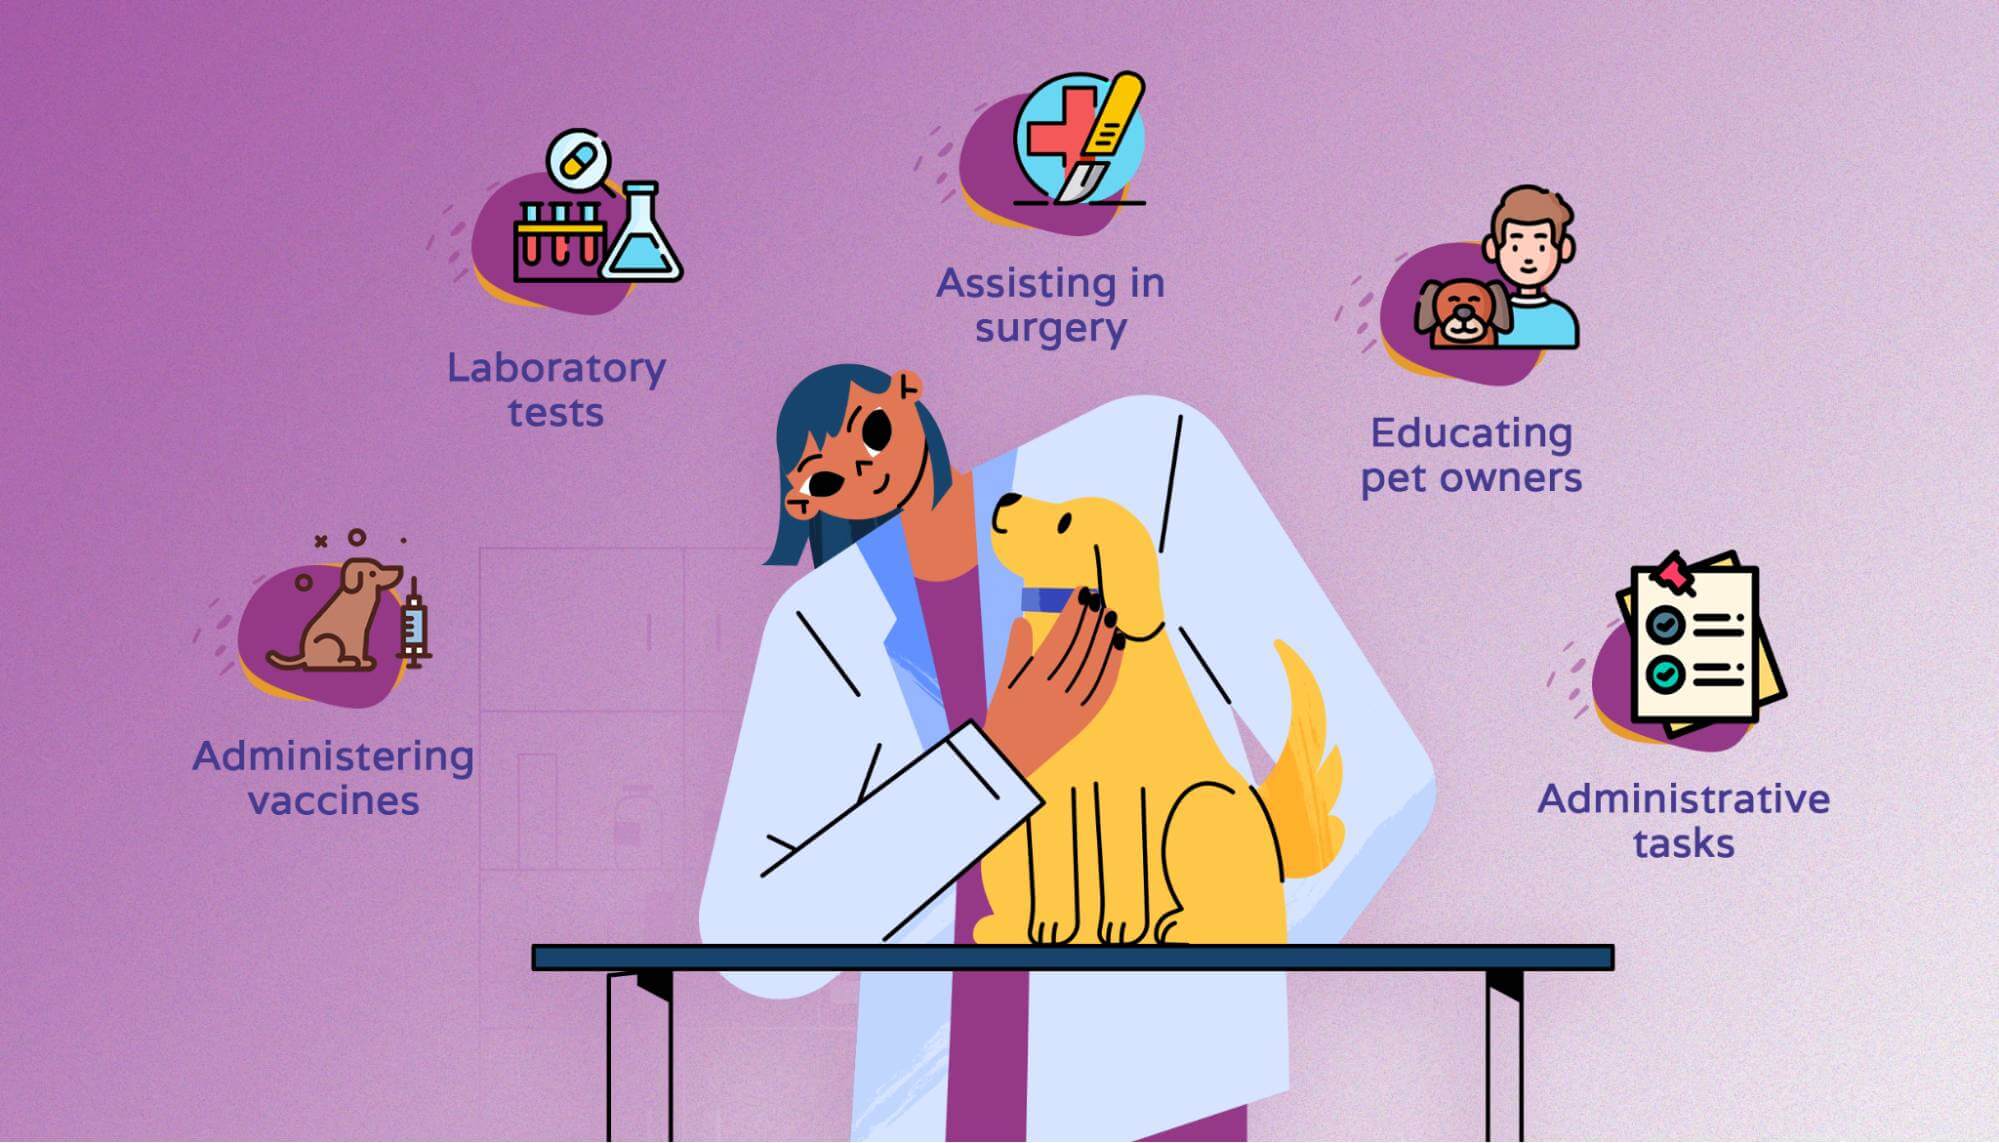 Illustration showing job responsibilities of a veterinary technician